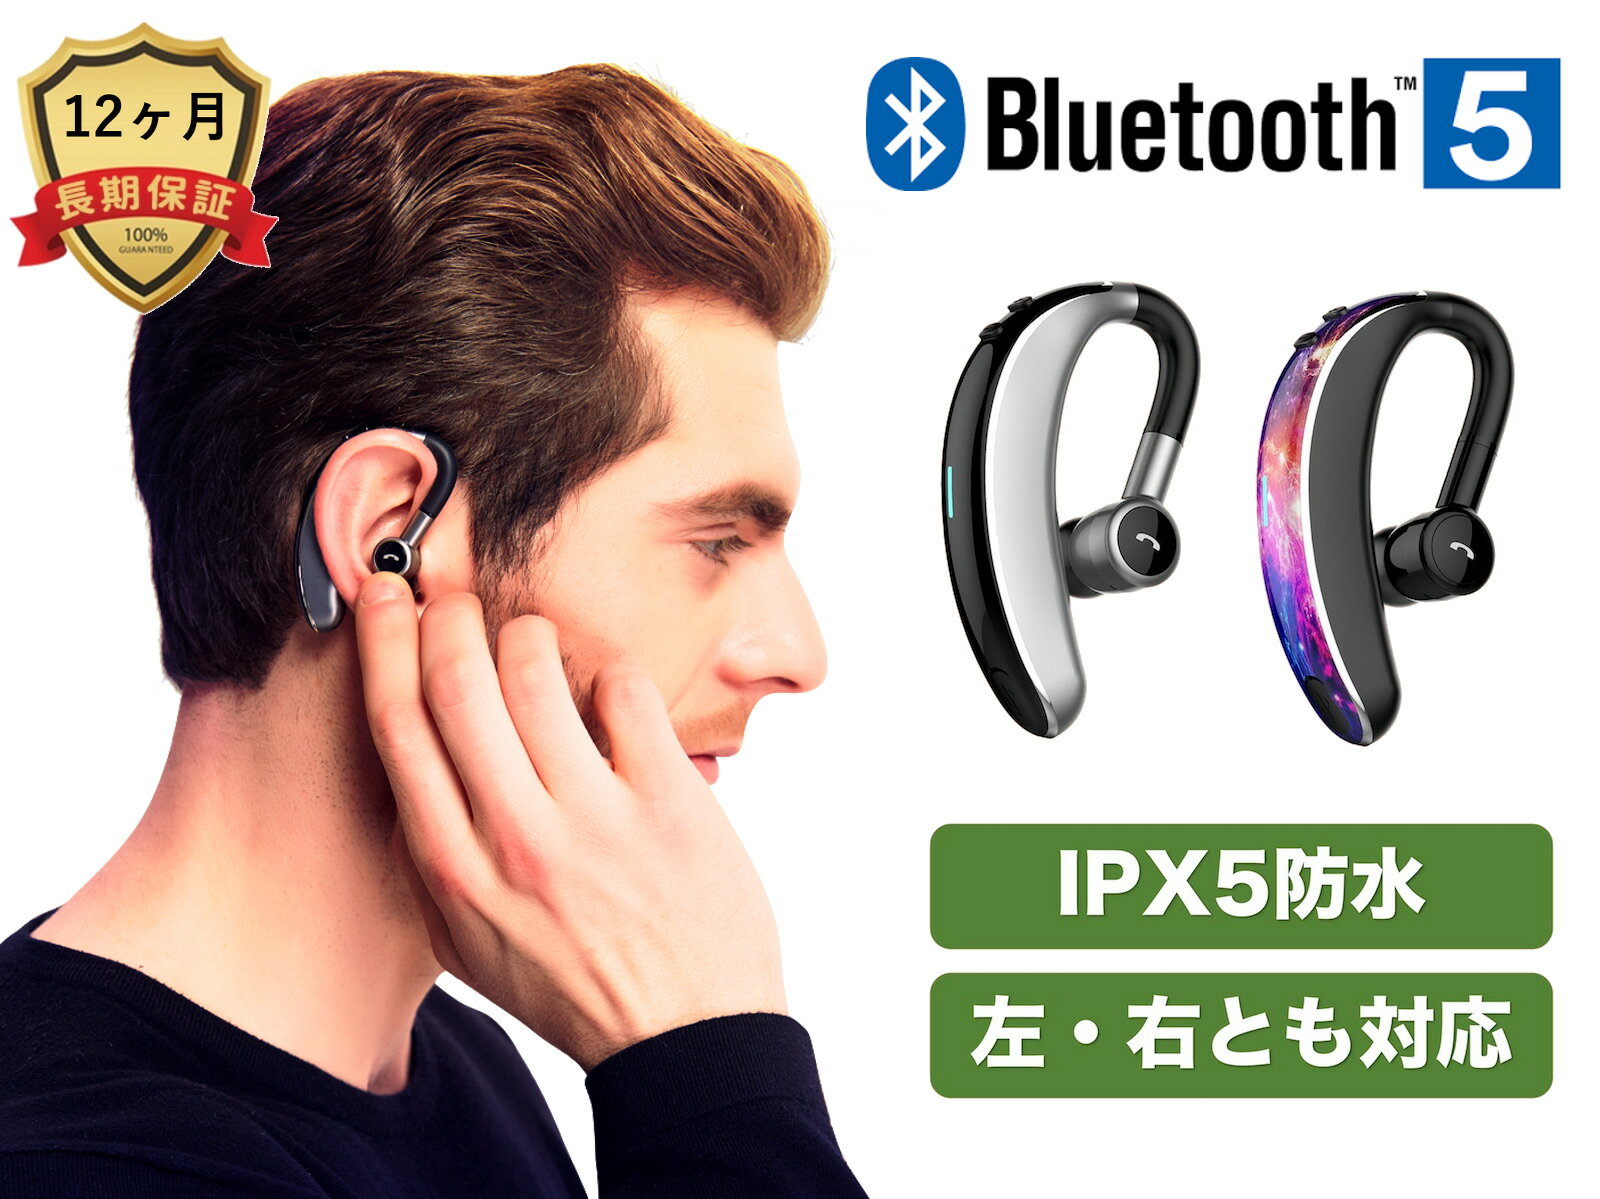 【Bluetooth 5.0】IPX5防水 ワイヤレスイヤホン 左右とも対応 連続20時間使用 日本語説明書 日本正規品 ヘッドホン …